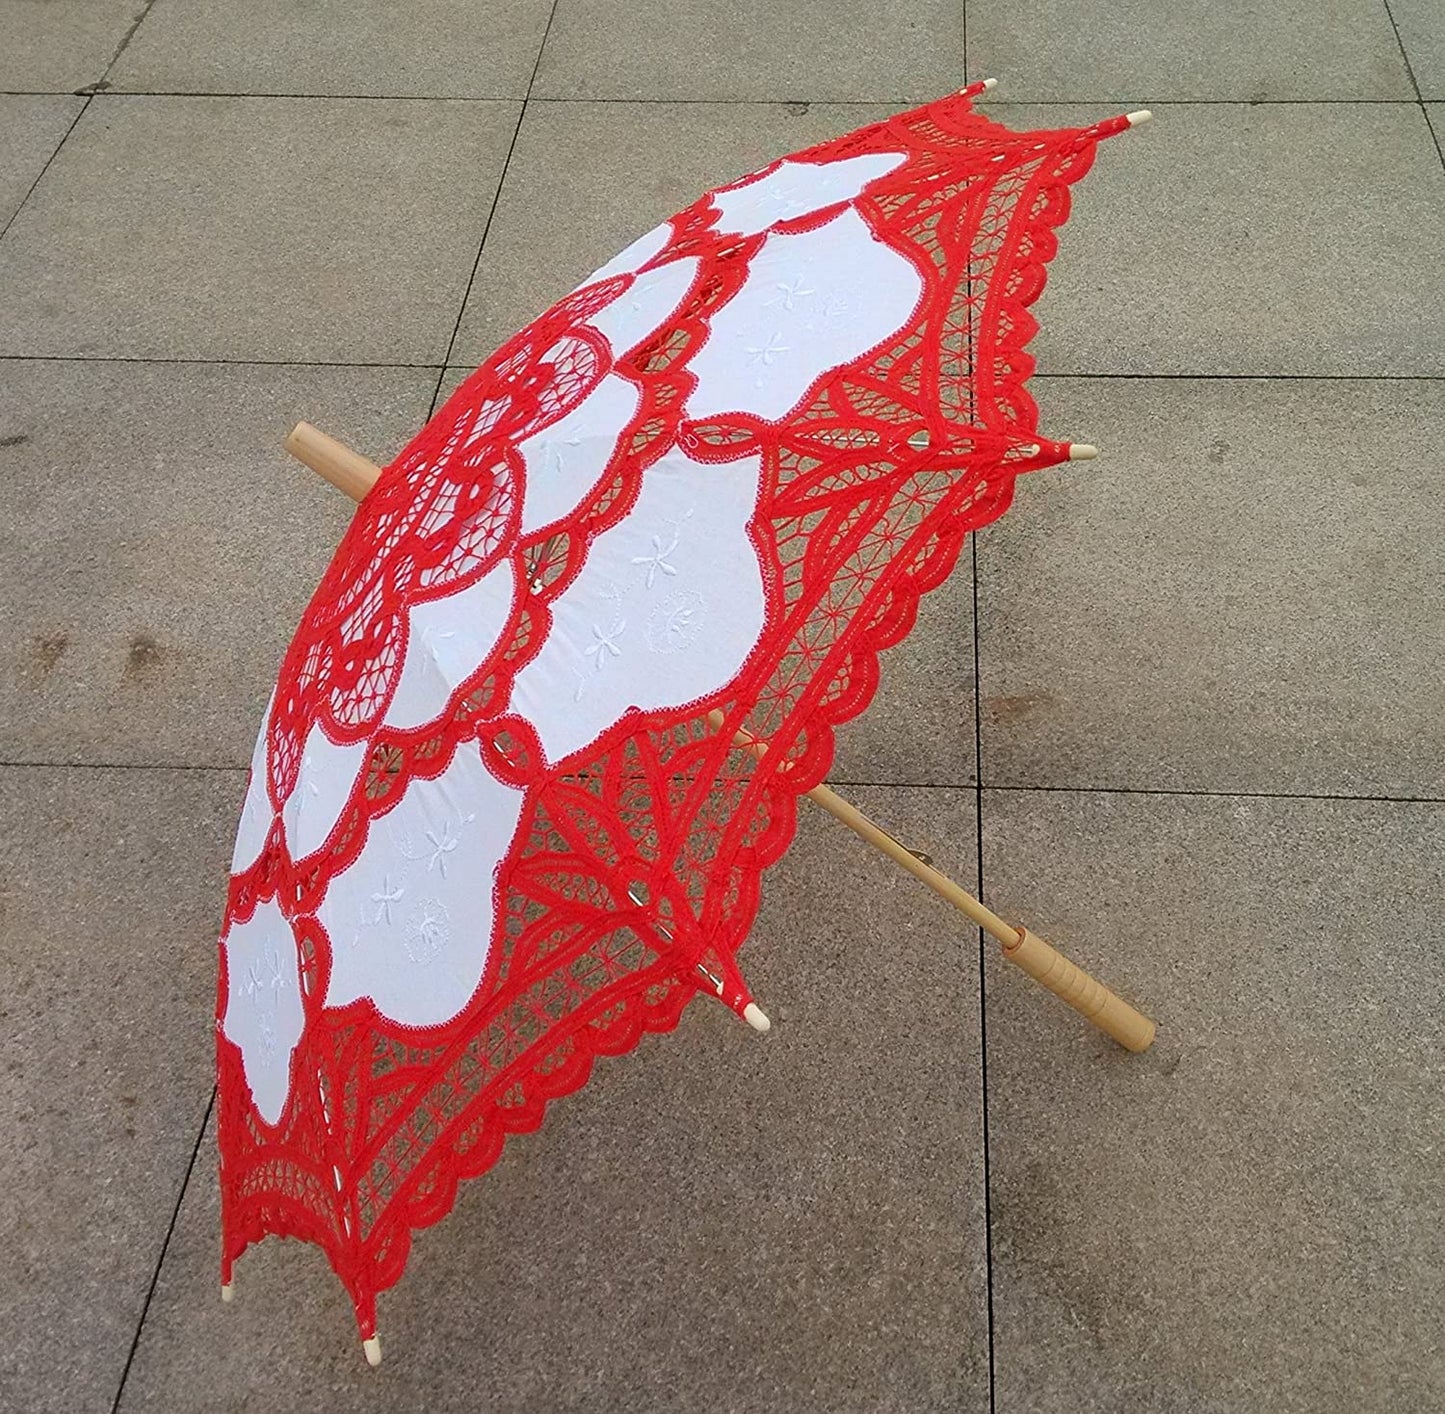 Lace parasol - medium